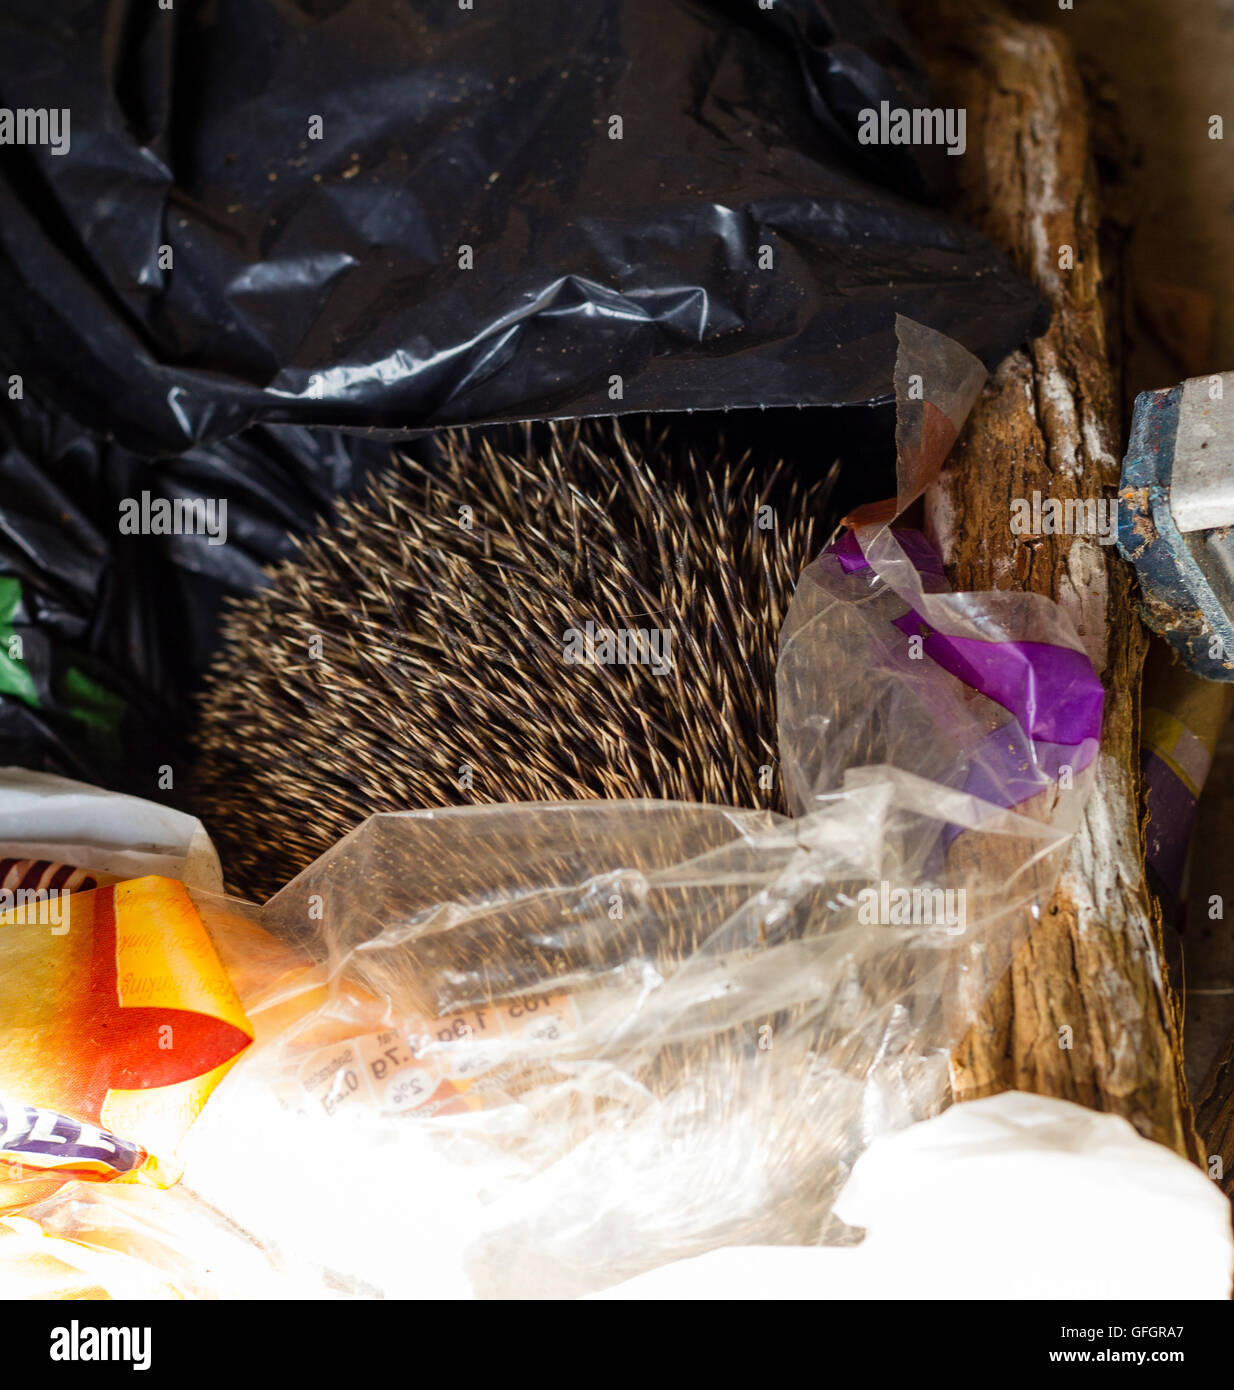 A hedgehog hidden away amongst old bags in a suburban garden Stock Photo